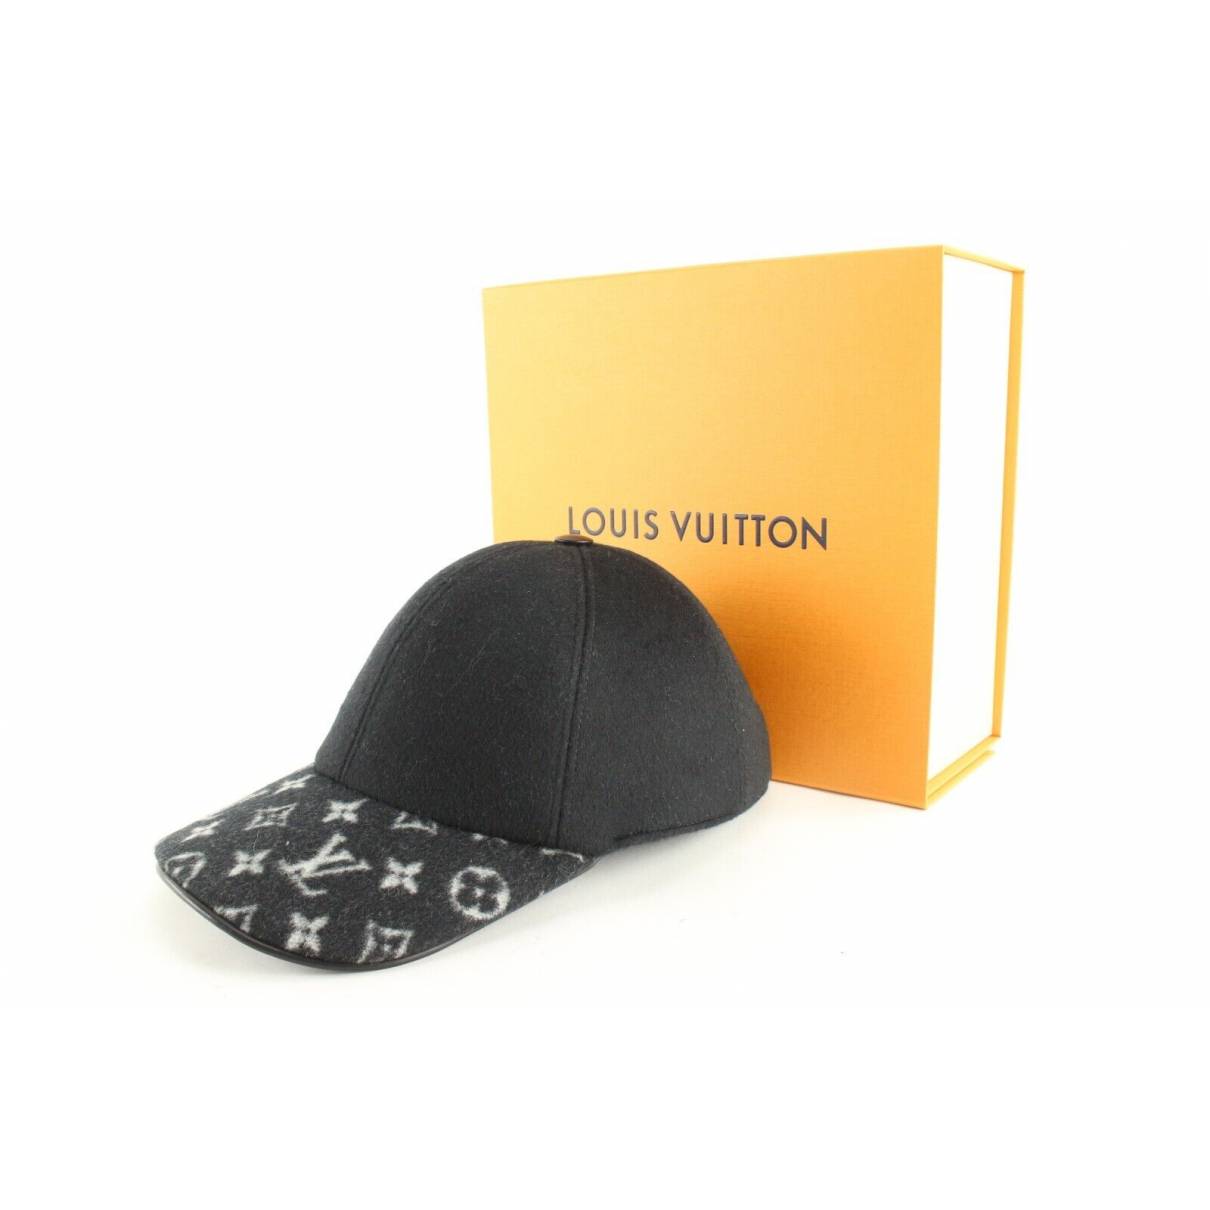 Louis Vuitton - Authenticated Hat - Cotton Black Plain for Men, Never Worn, with Tag